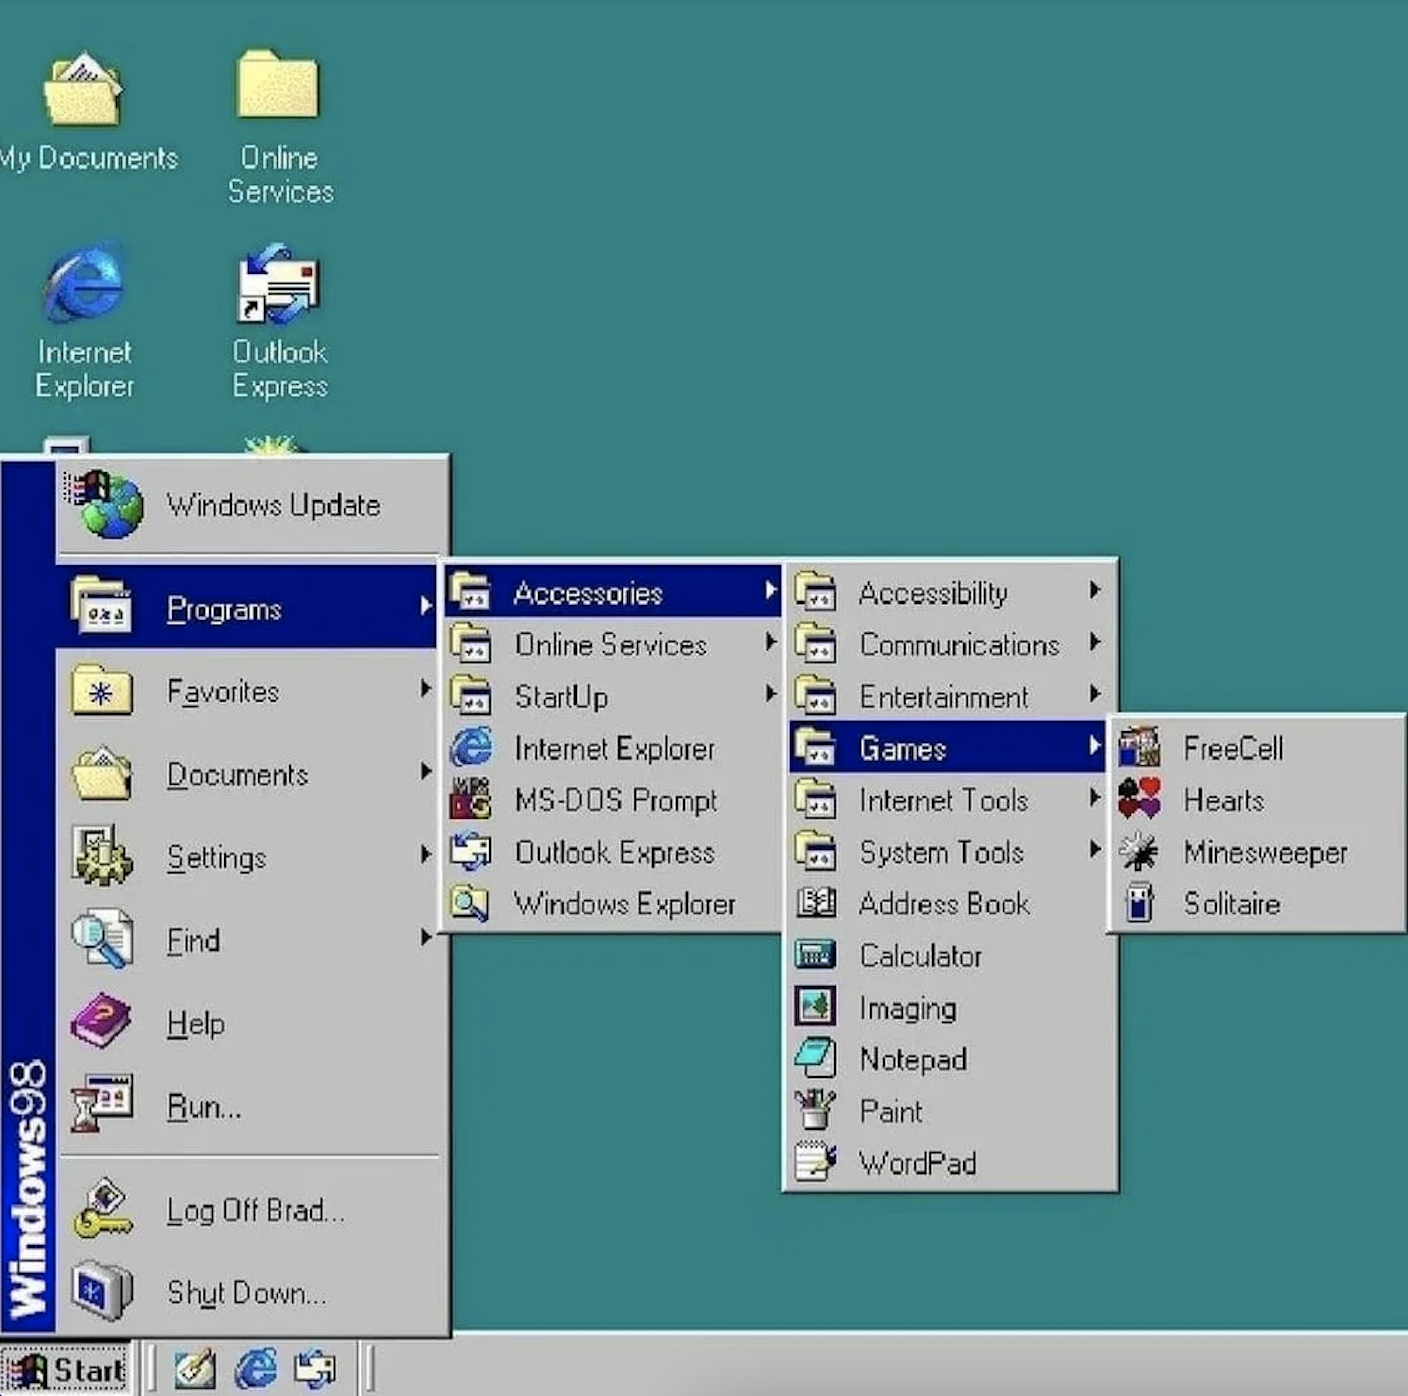 Old Windows menu bar